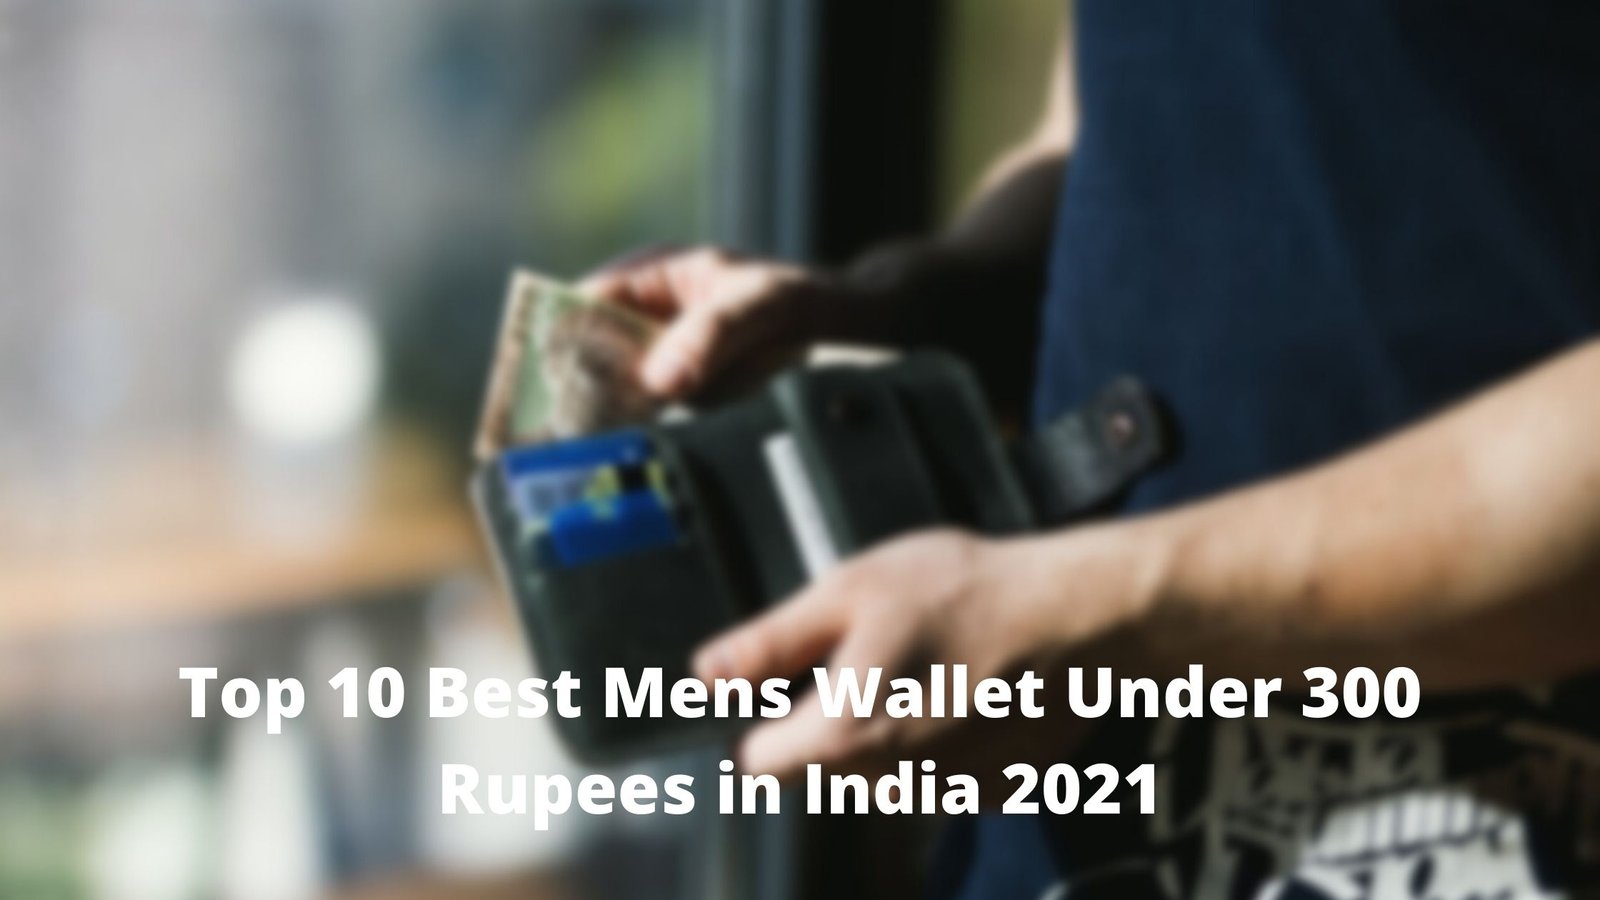 Top 10 Best Mens Wallet Under 300 Rupees in India